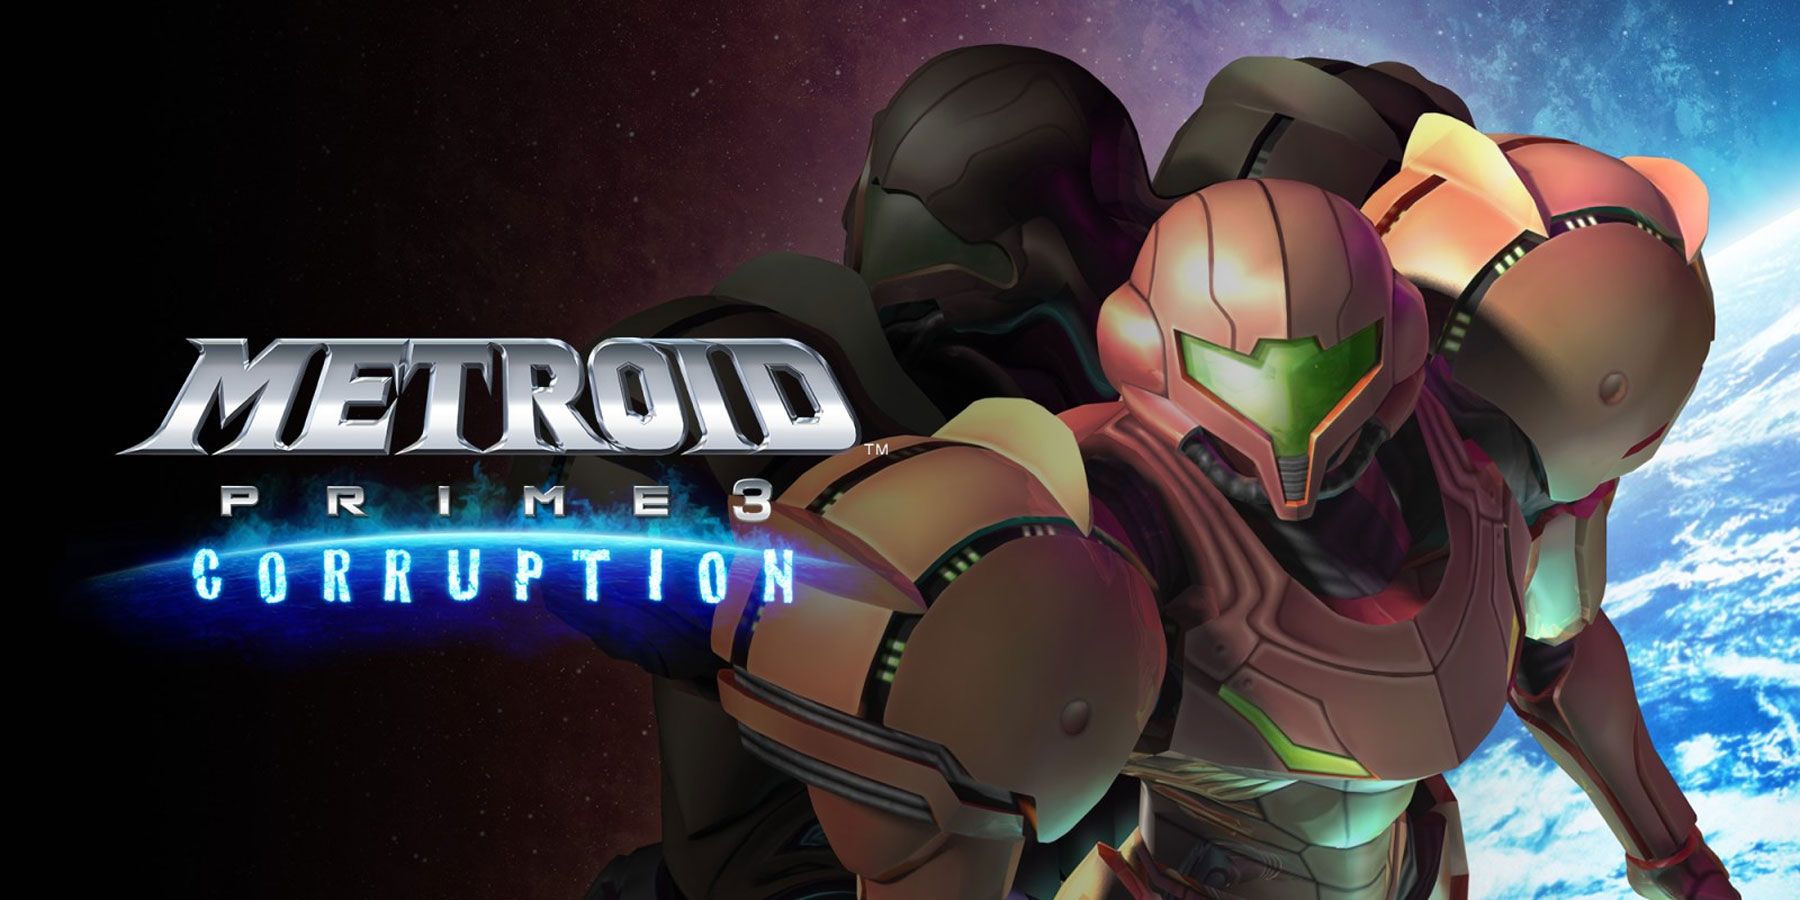 Metroid Prime 3 se lanzó originalmente como un juego de mundo abierto